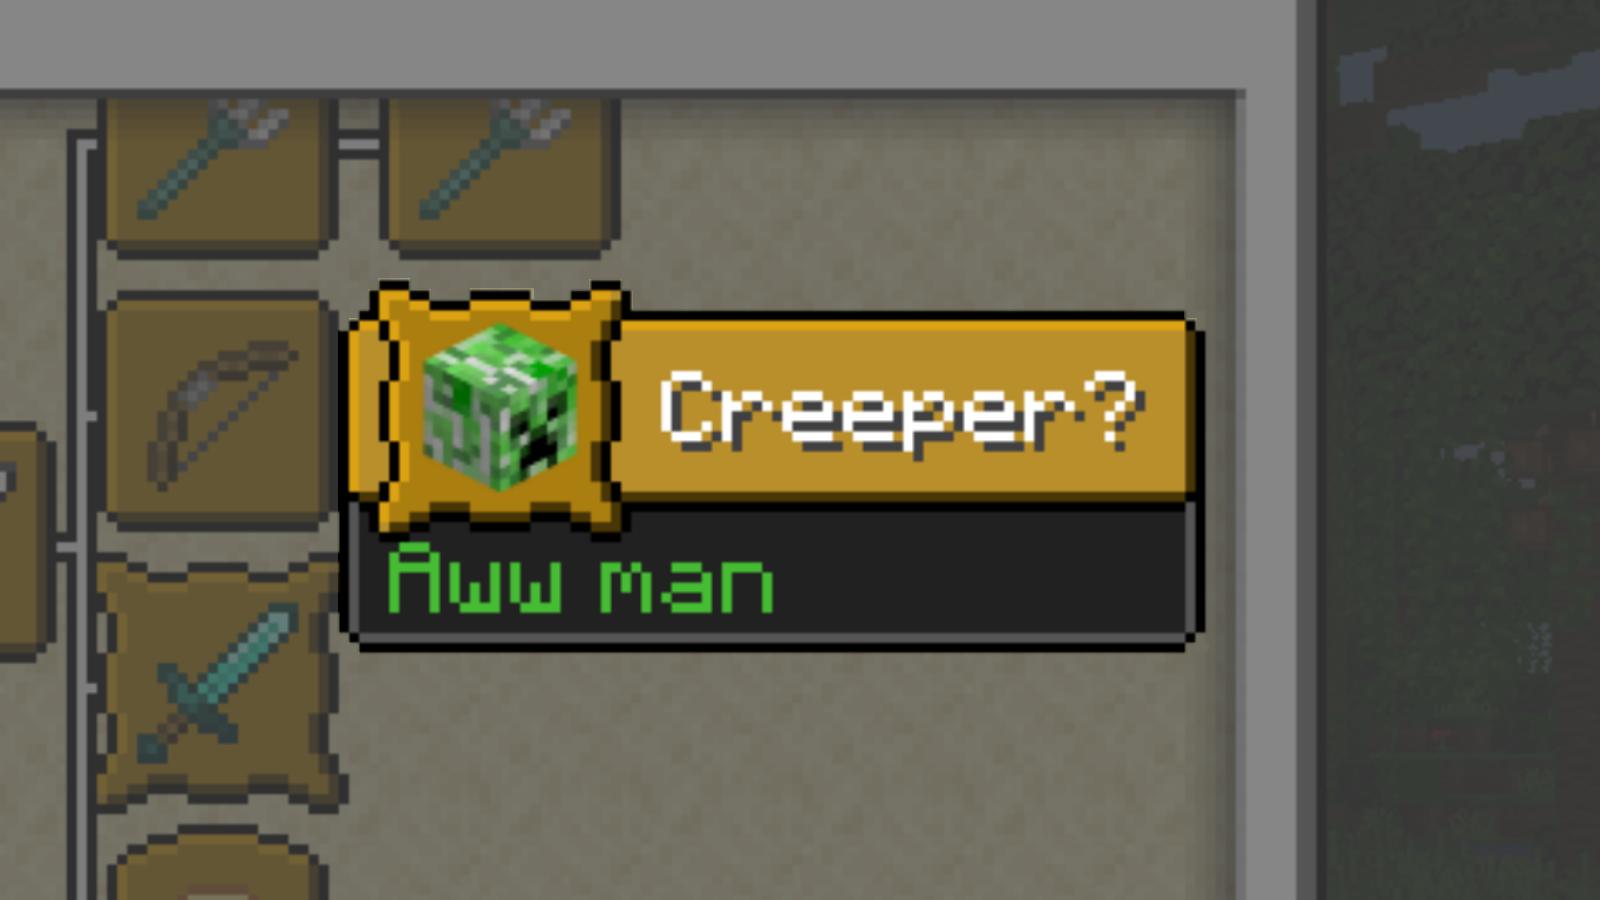 I made Creeper Aww man achievement in minecraft